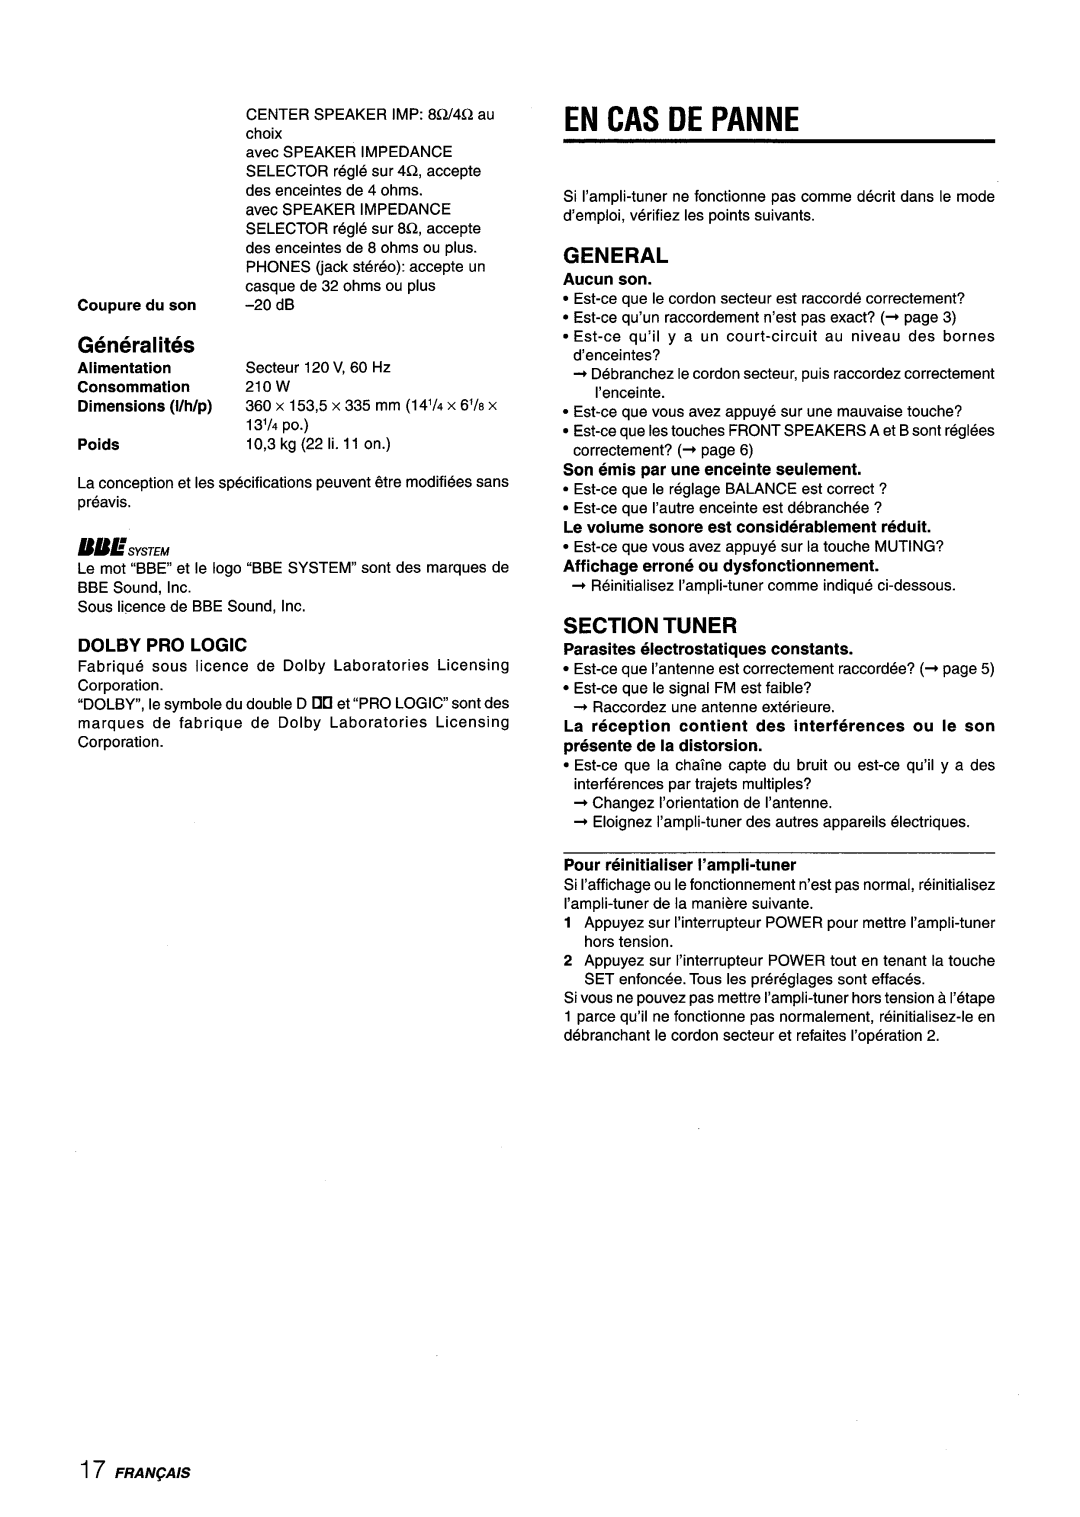 Aiwa AV-X220 manual En Cas De Panne, Generalities, Section Tuner, Aucun son, Pour reinitialiser I’ampli-tuner, Alimentation 